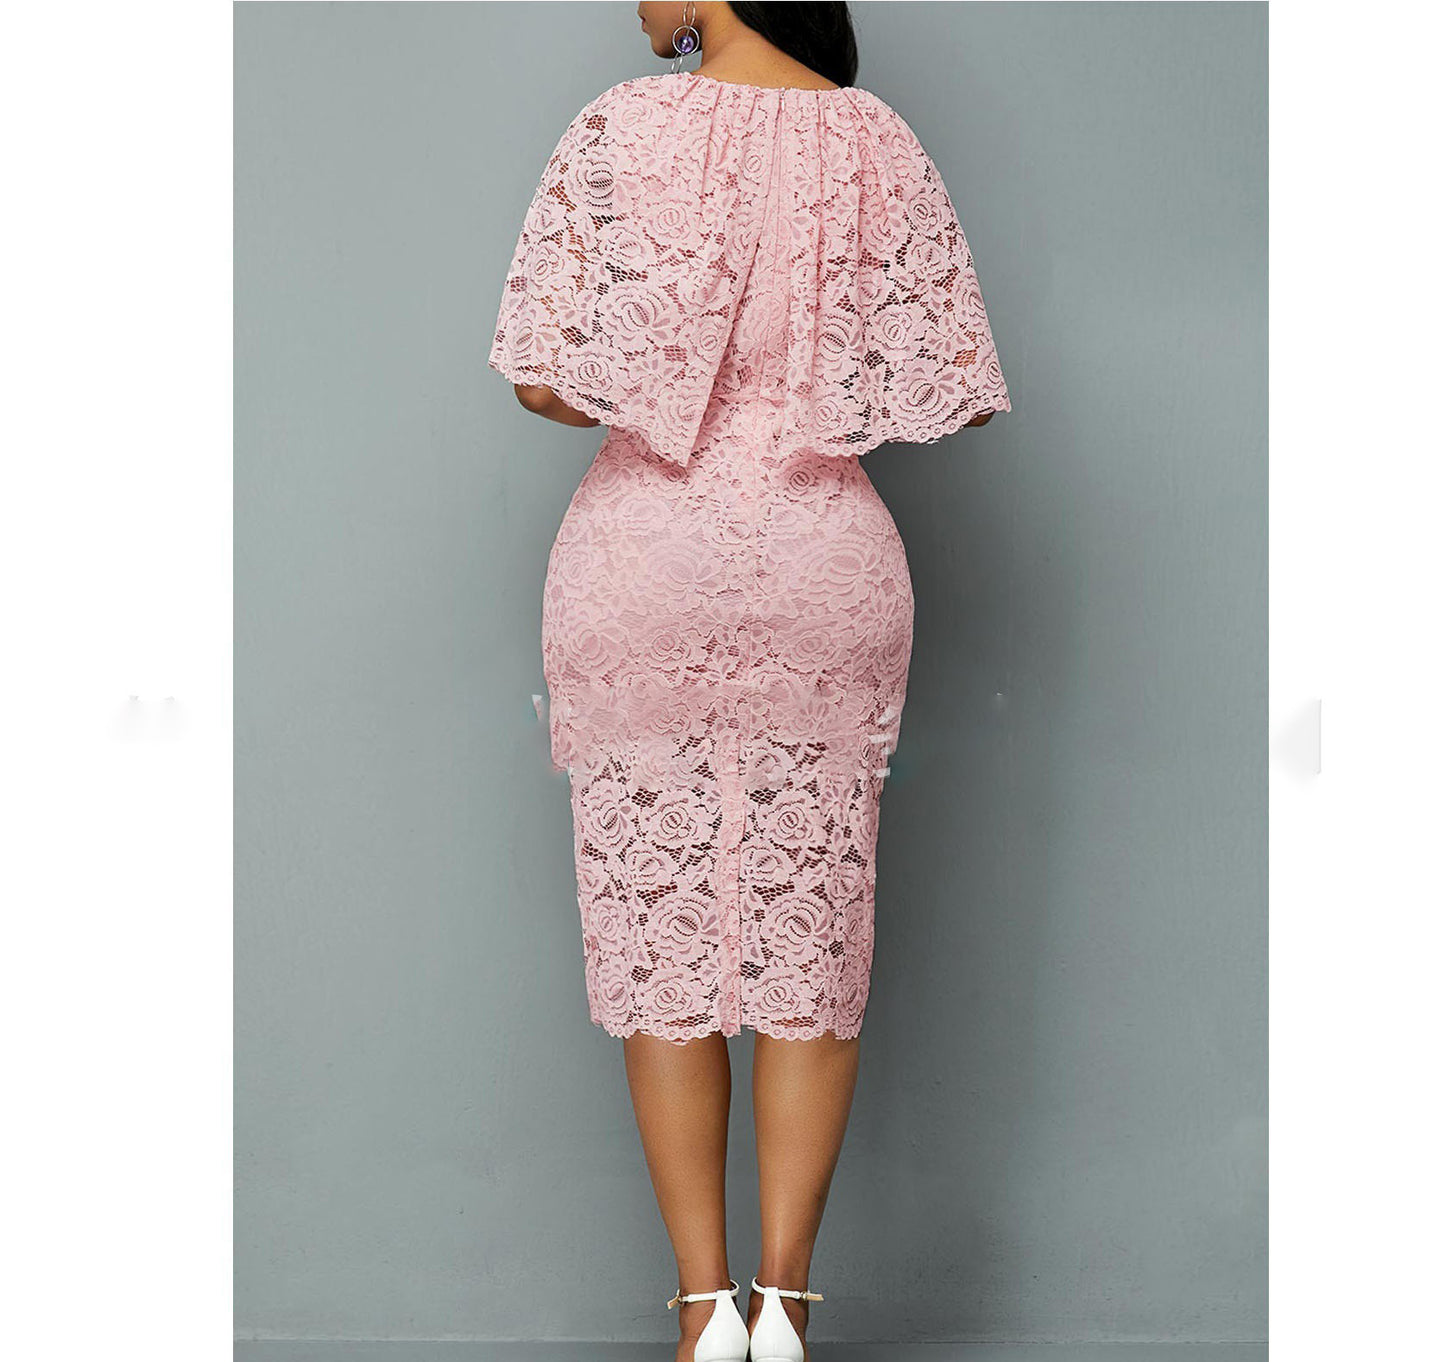 Pink Lace Dress For Women Fashion Wedding Sizes S to 5XL Plus Size